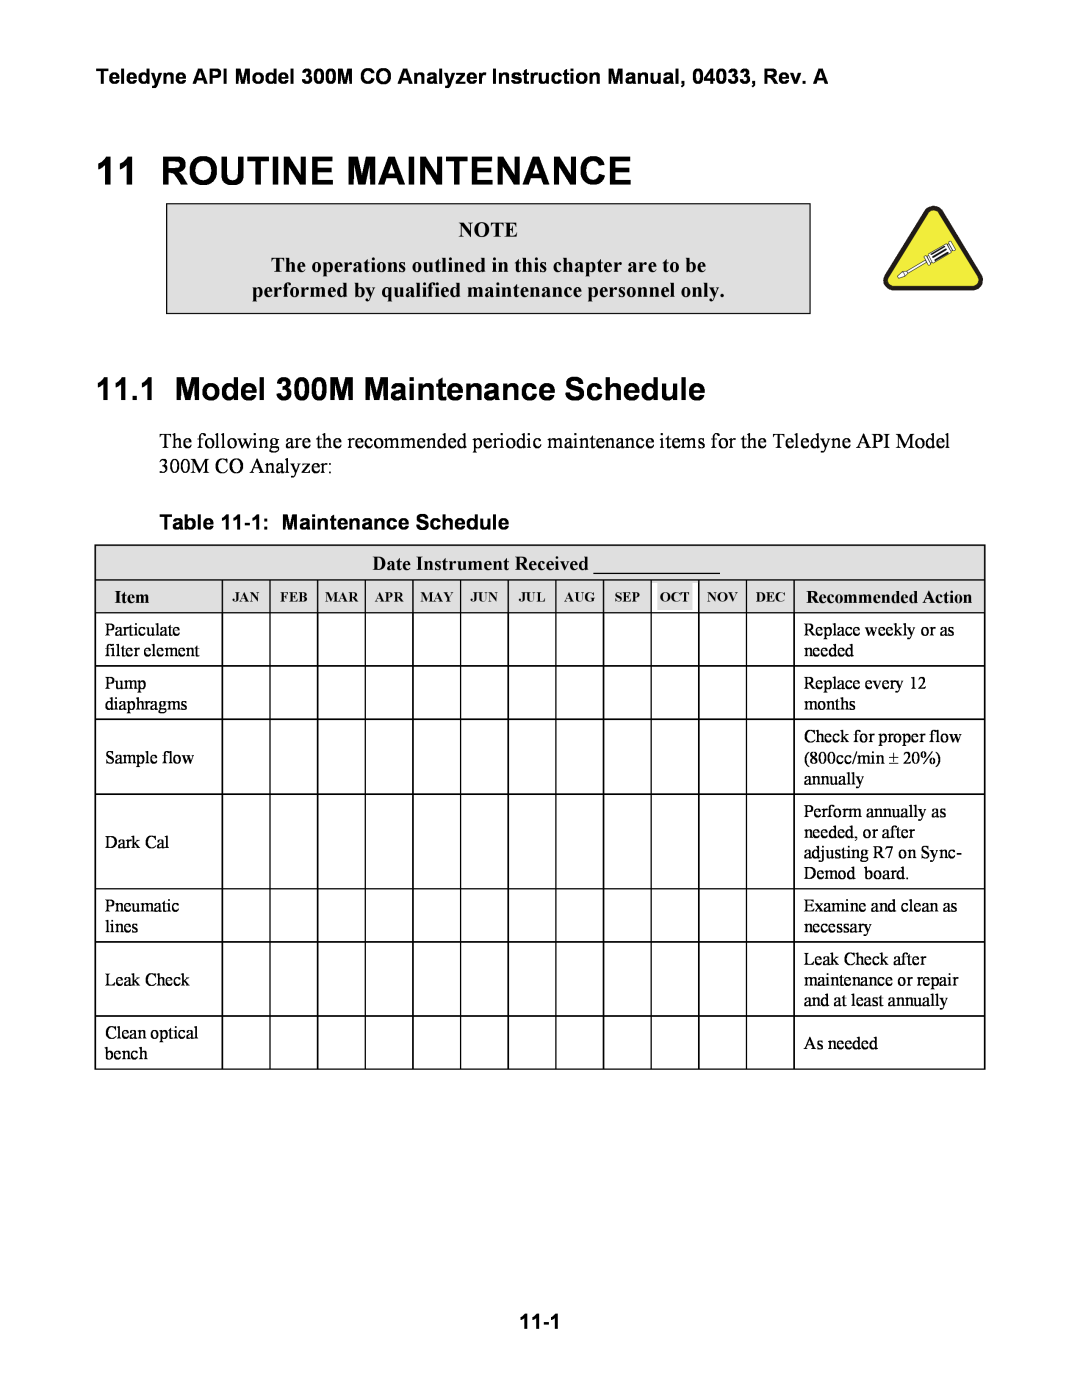 Teledyne Routine Maintenance, Model 300M Maintenance Schedule, 1 Maintenance Schedule, 11-1, Date Instrument Received 